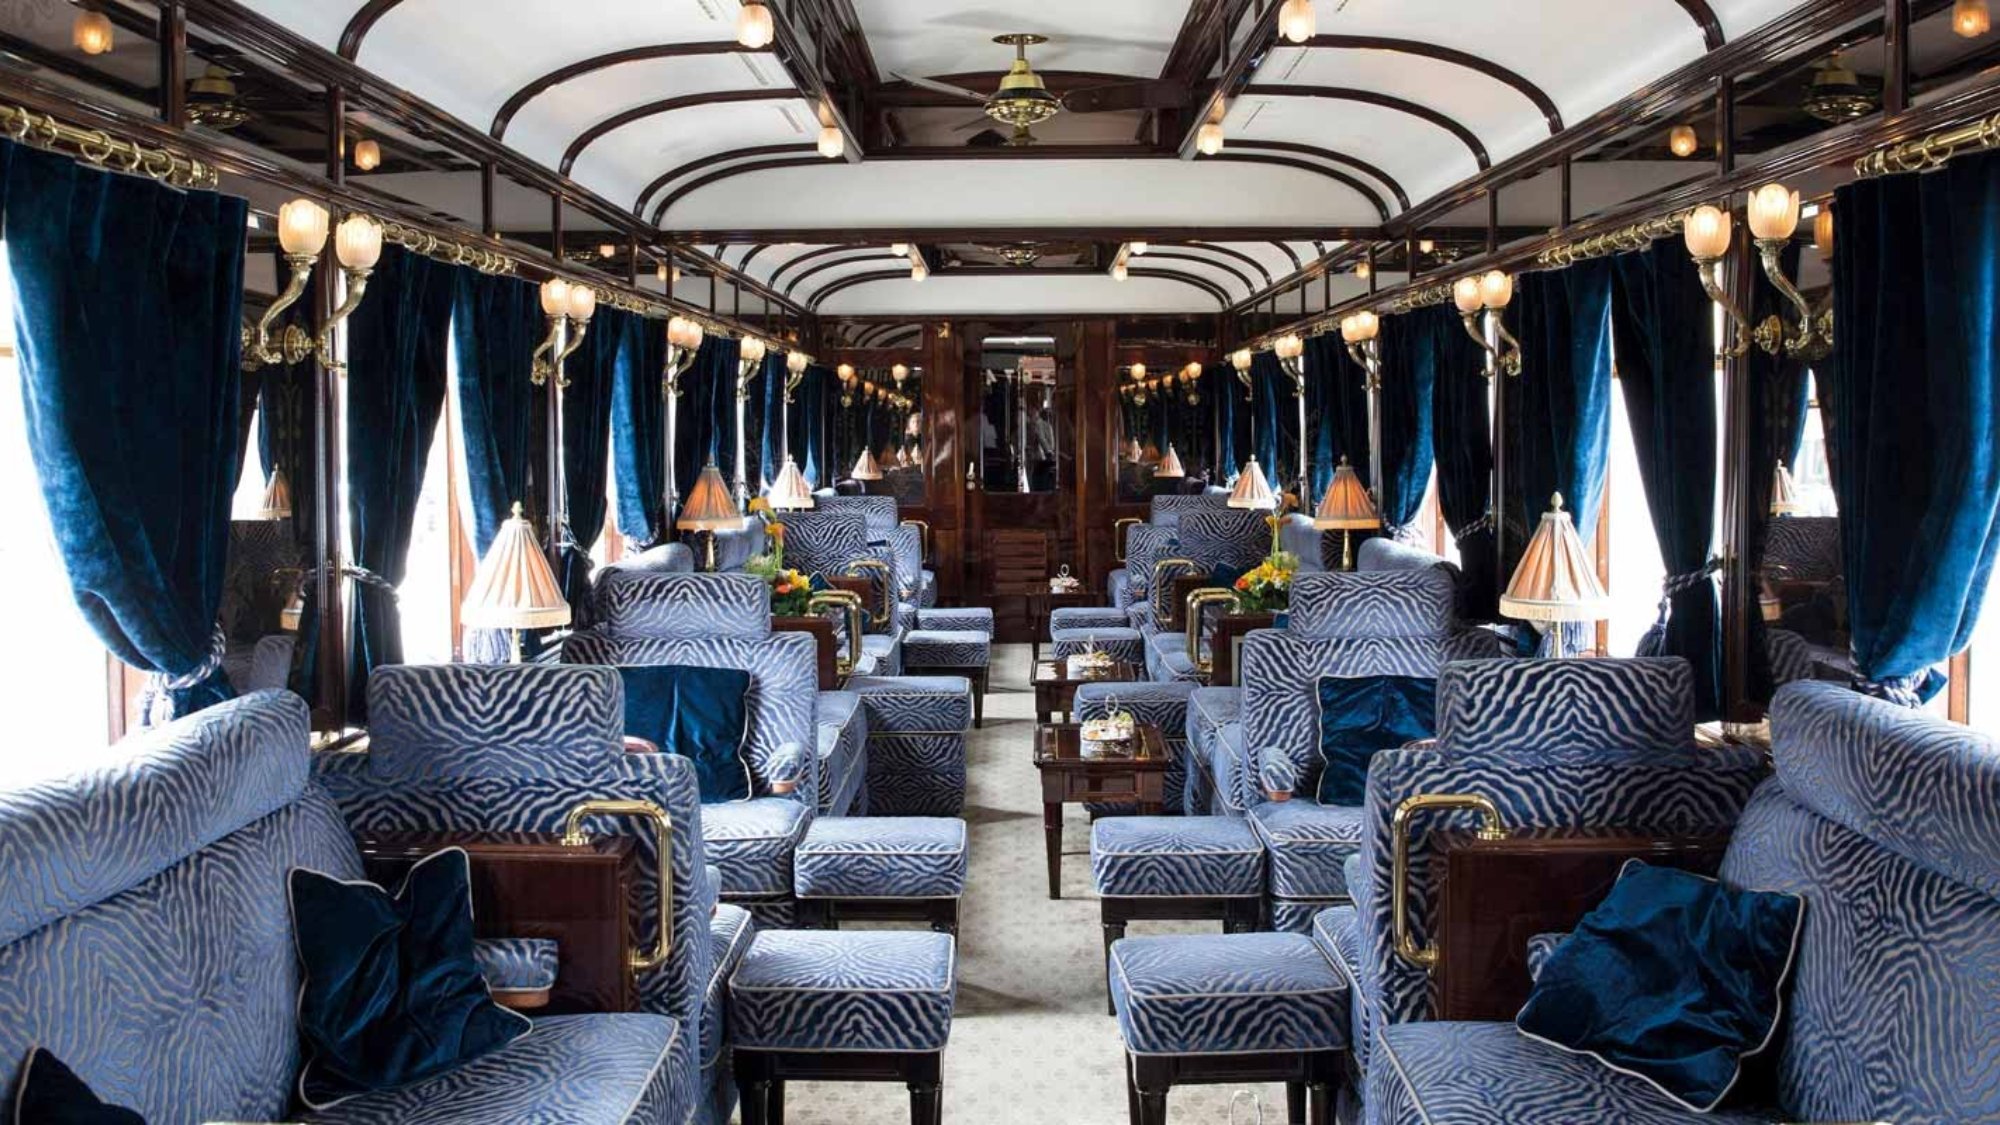 Venice-Simplon Orient Express - Wikipedia